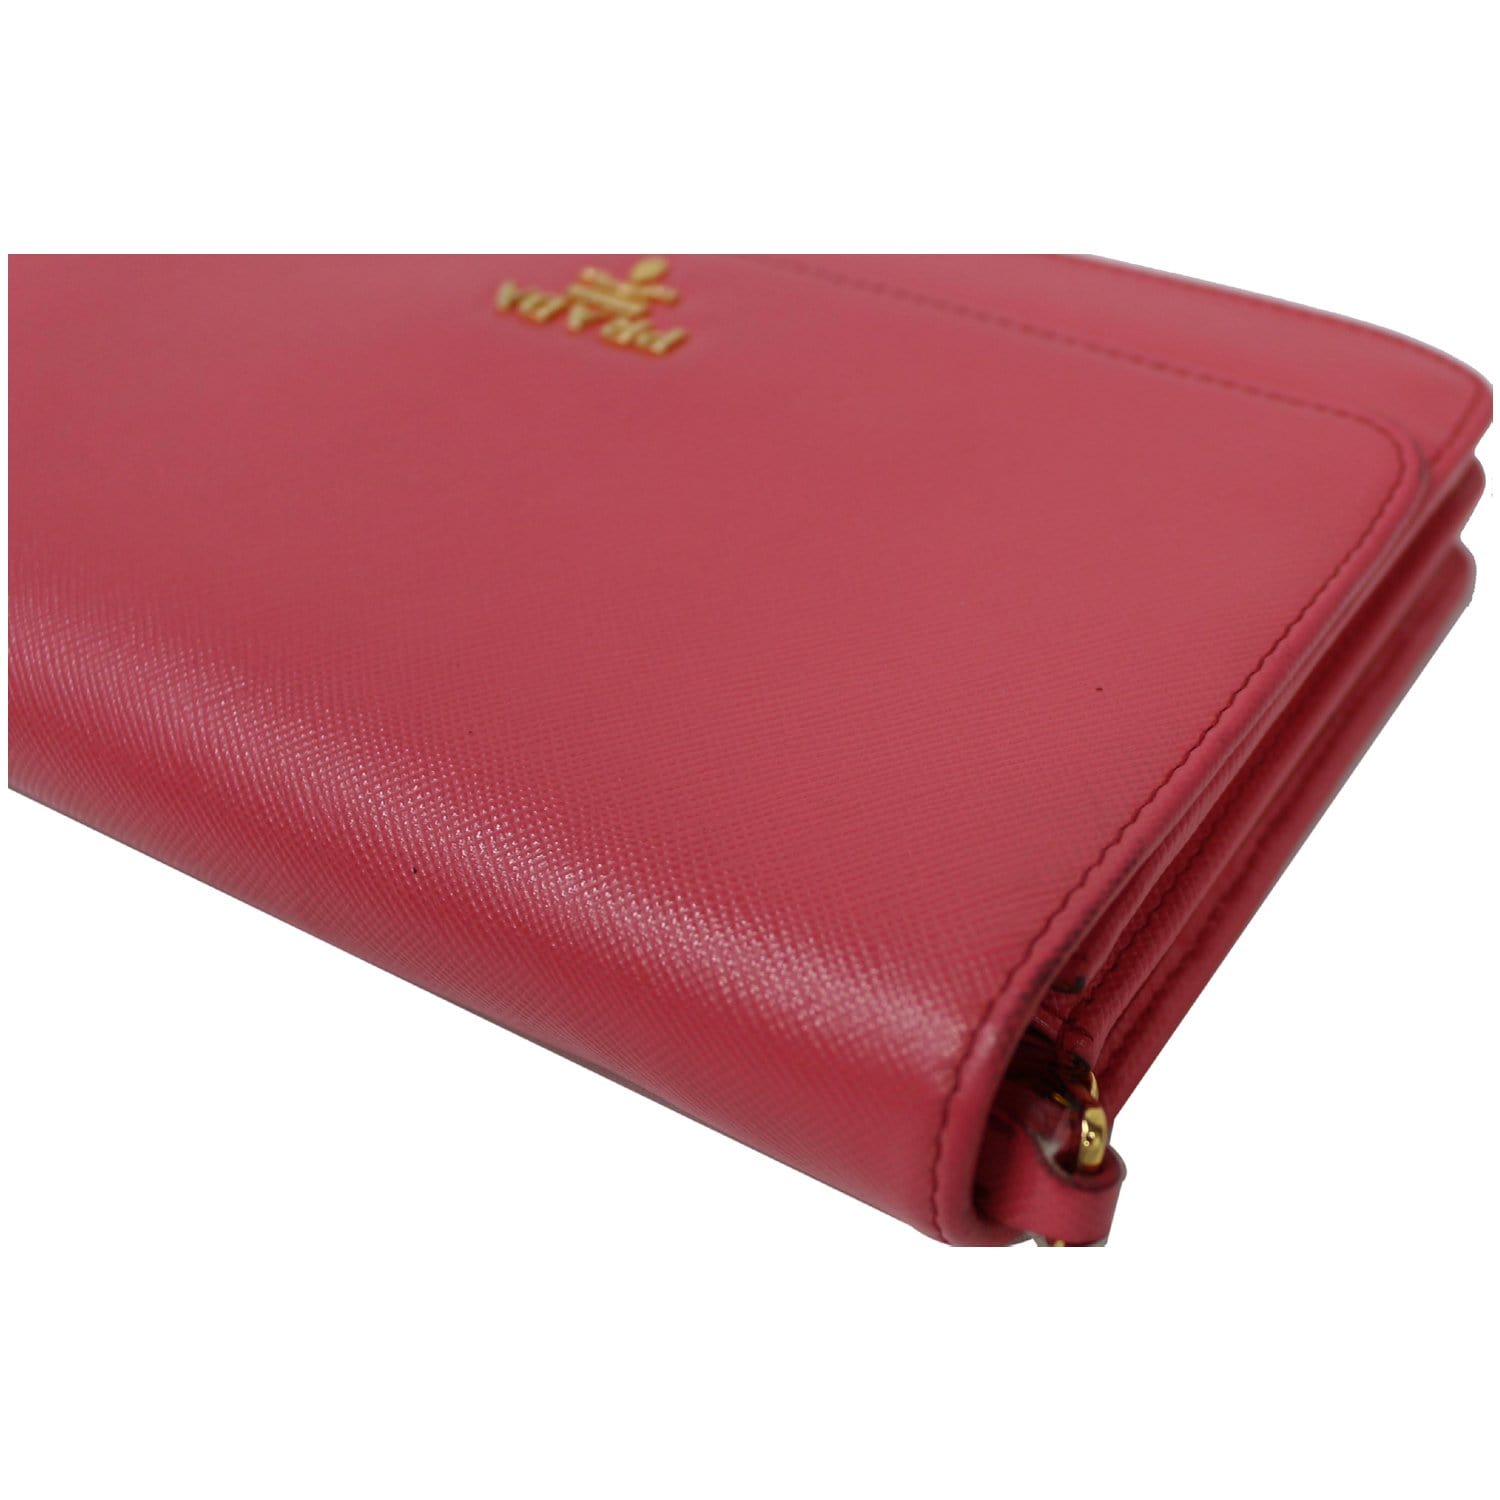 Prada Chain Wallet Crossbody Saffiano Leather Pink 118037203